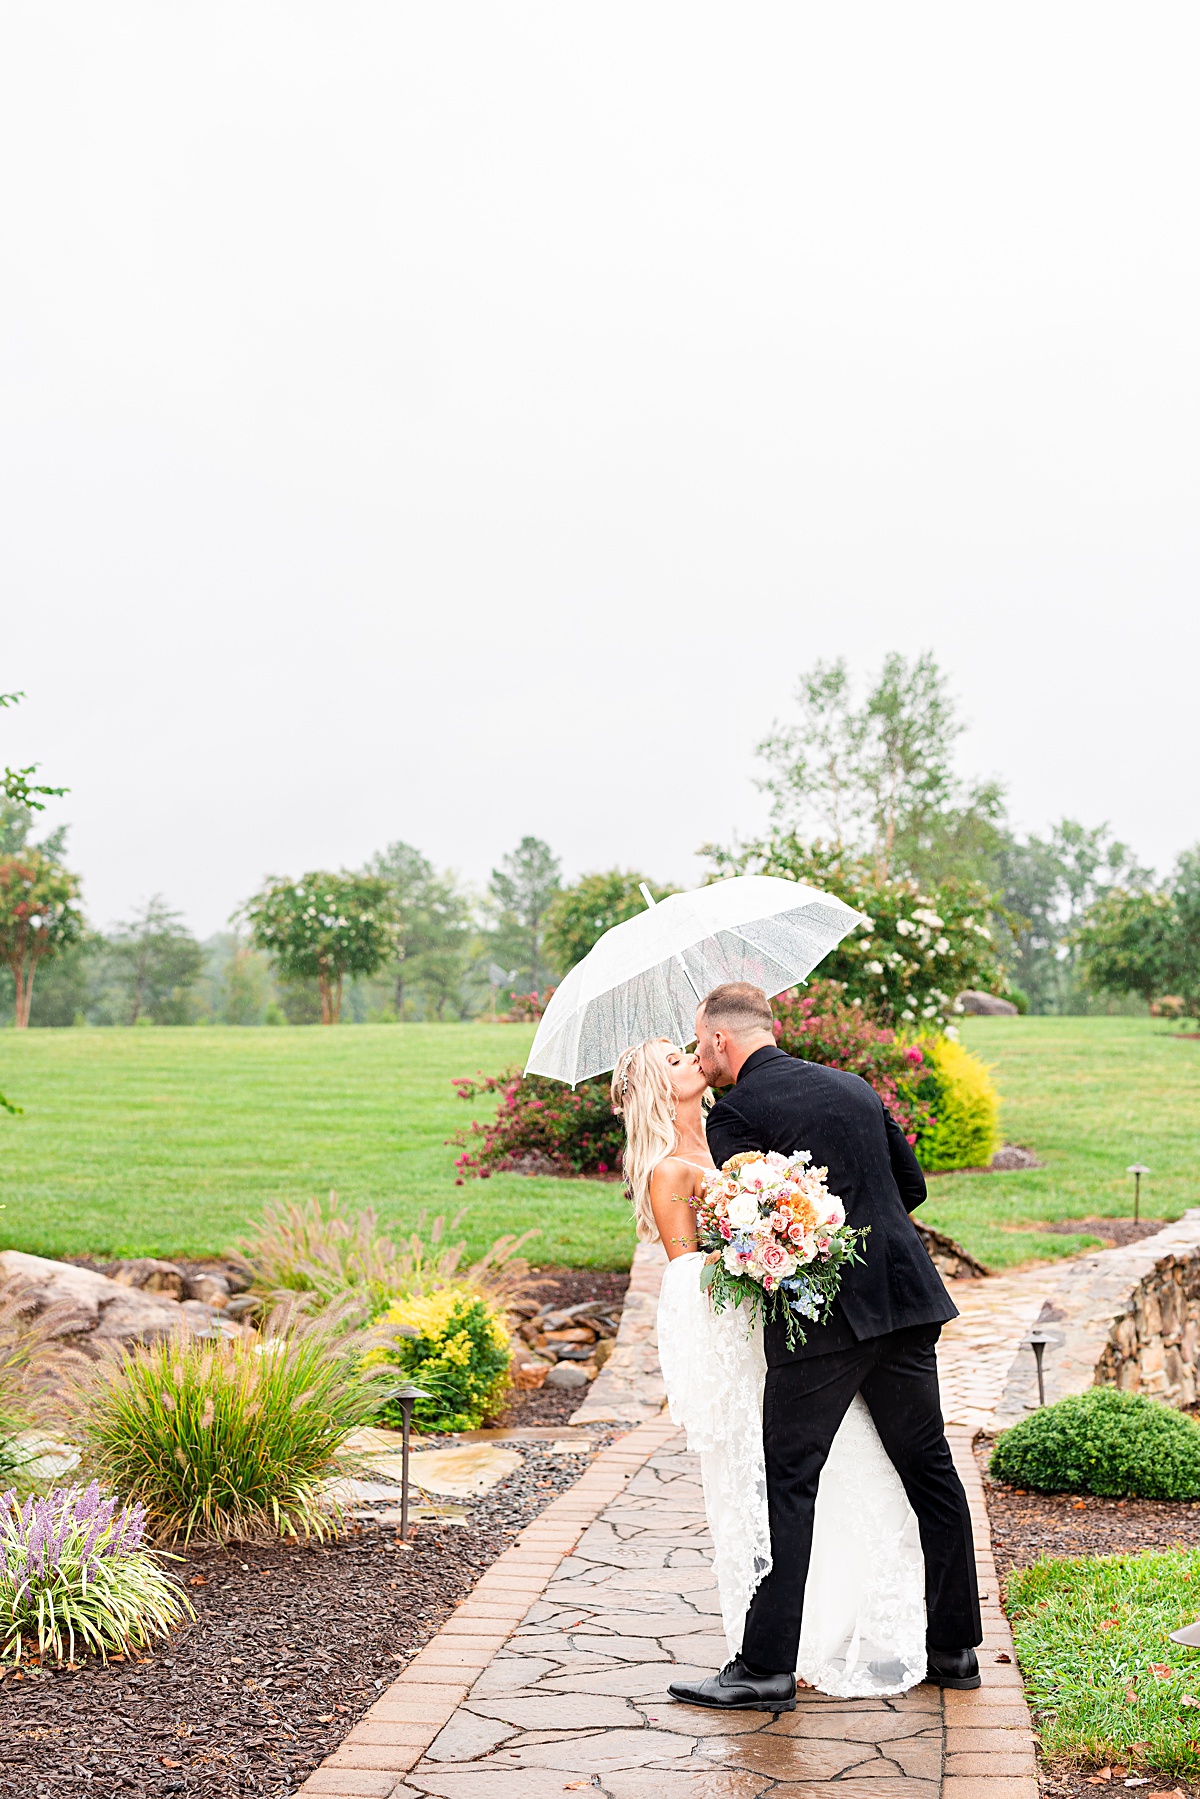 Bride and Groom portrait in the rain at their Atkinson Farms Rainy Wedding in Danville, Virginia.